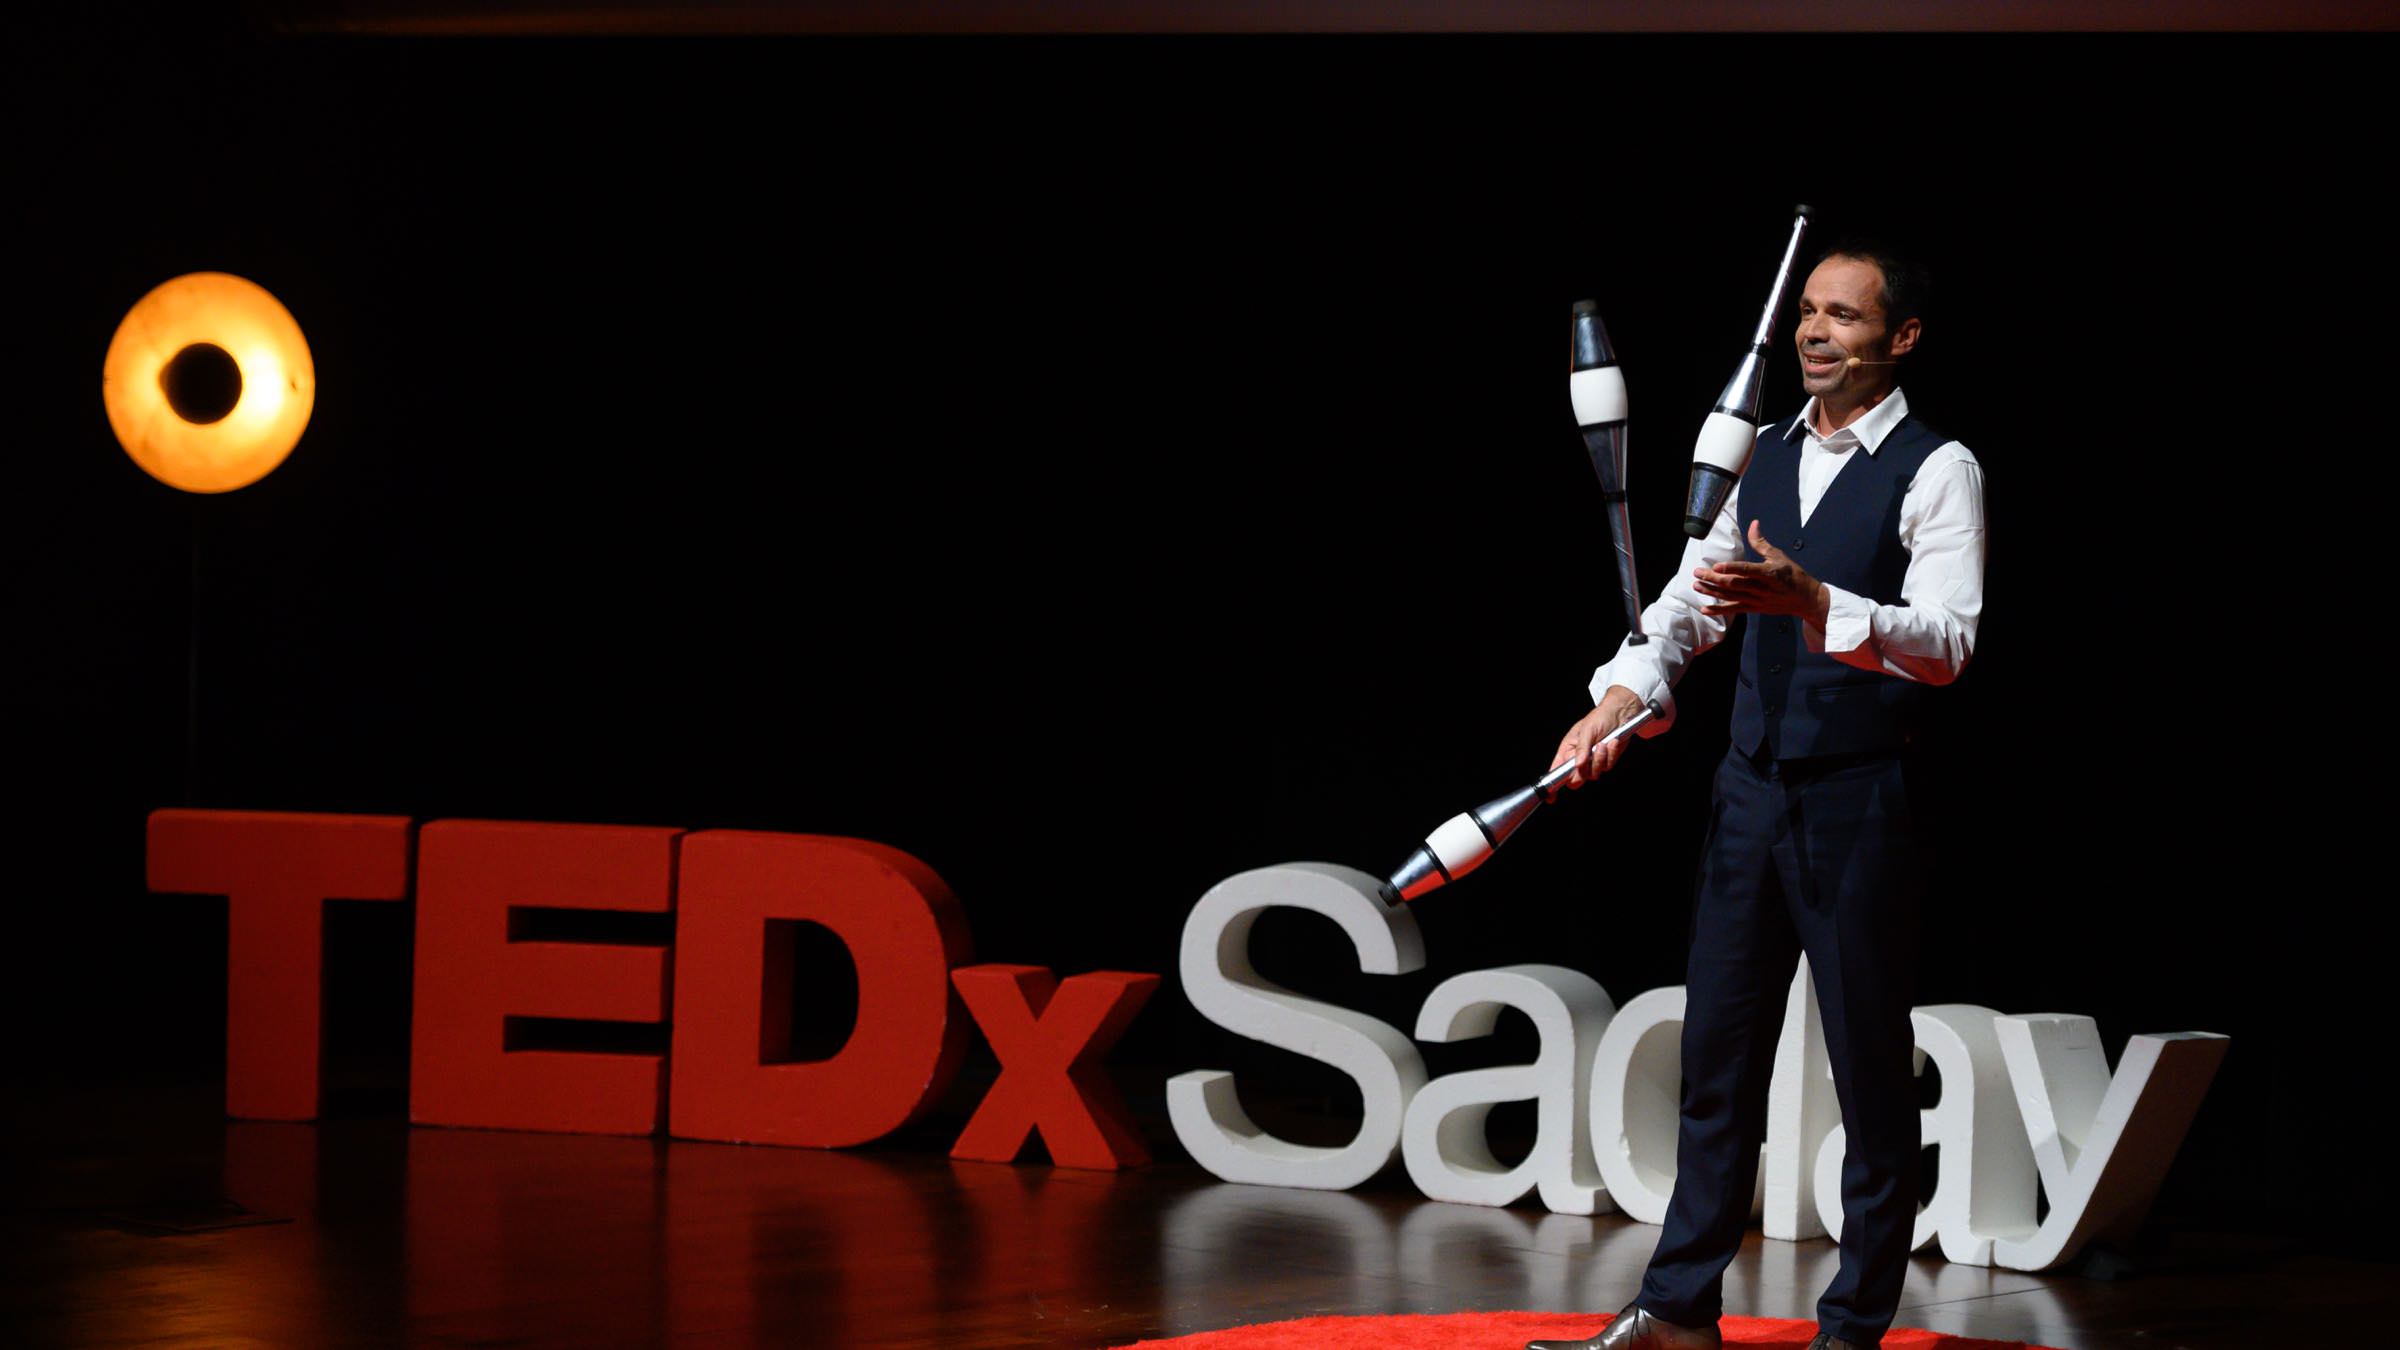 TEDx Saclay